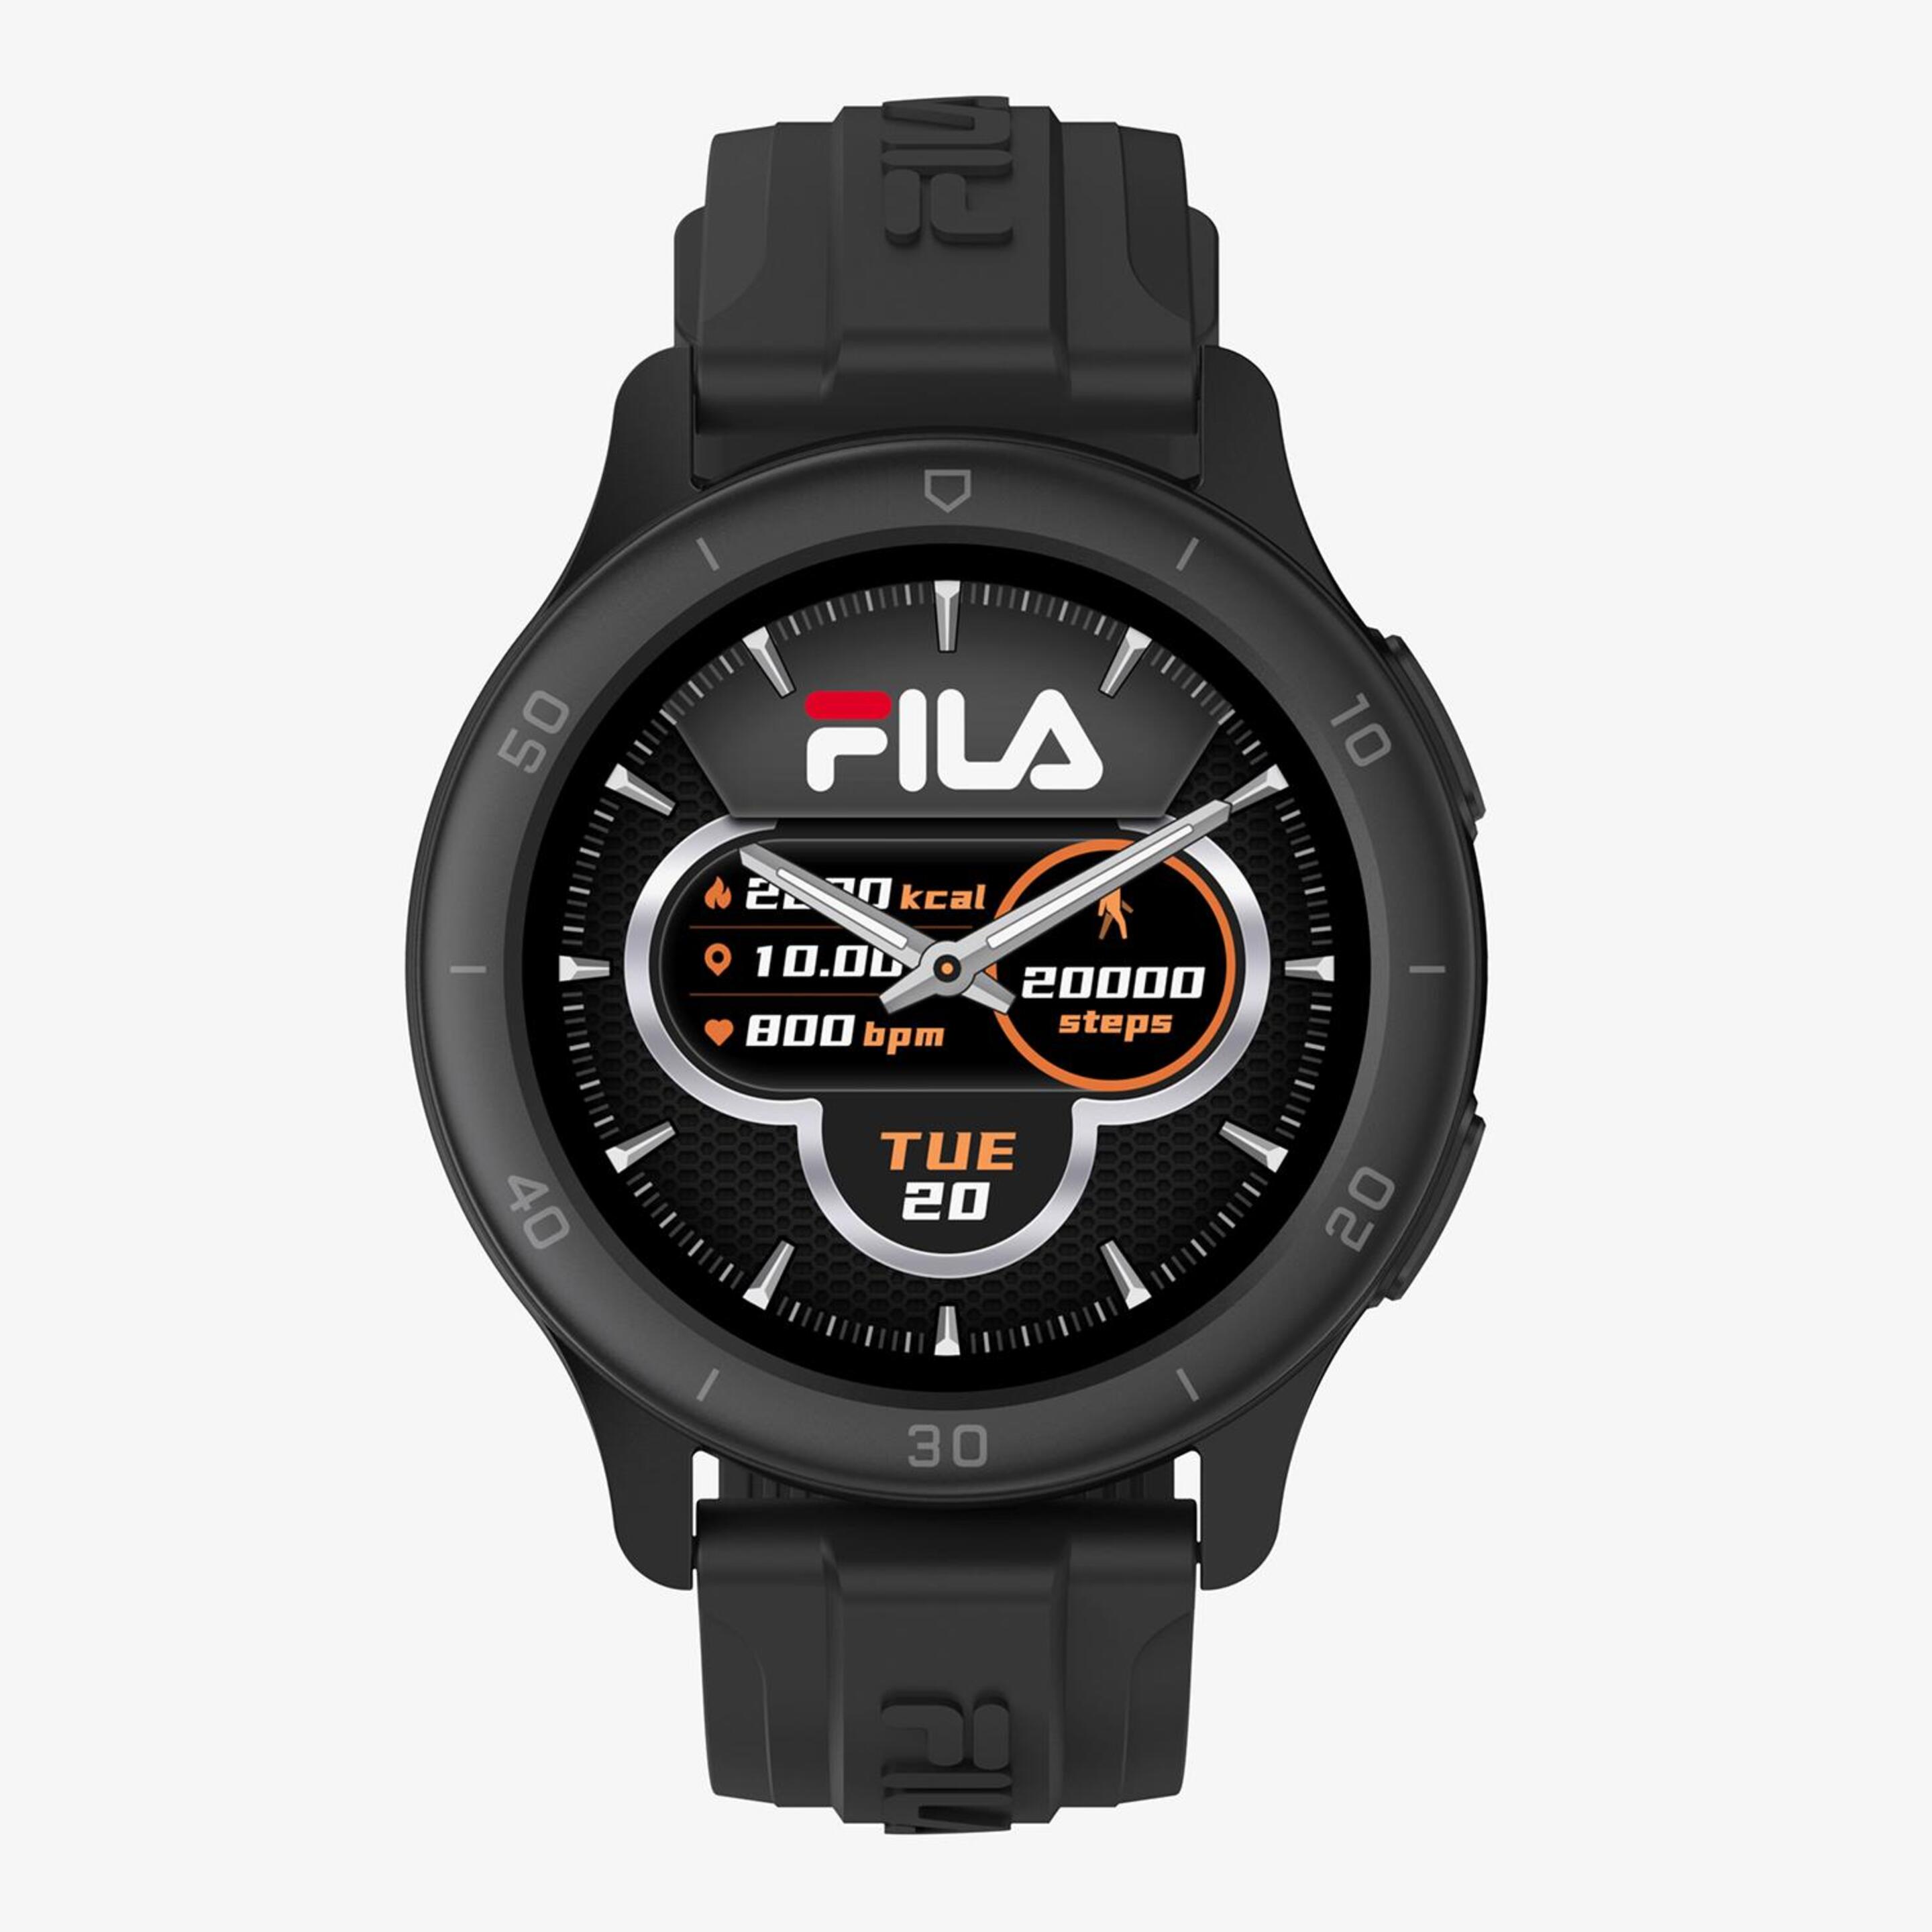 Fila Easy Trip Smartwatch Running